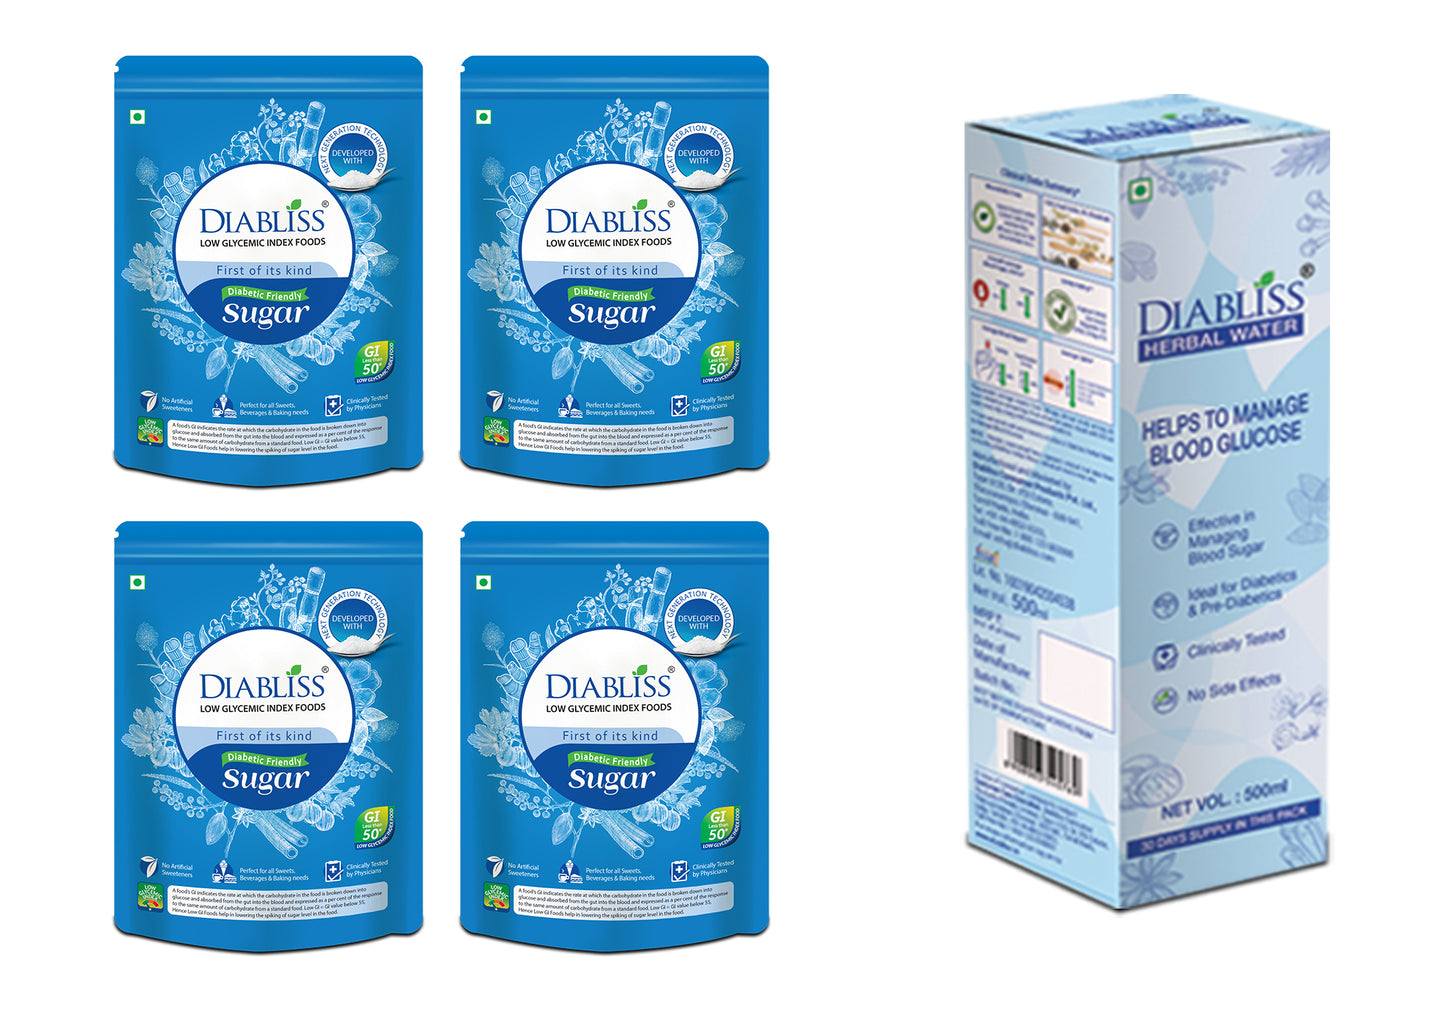 Diabliss Diabetic Friendly Sugar 40 x 5g Sachet Box & Herbal Water for Blood Glucose Management Combo Pack